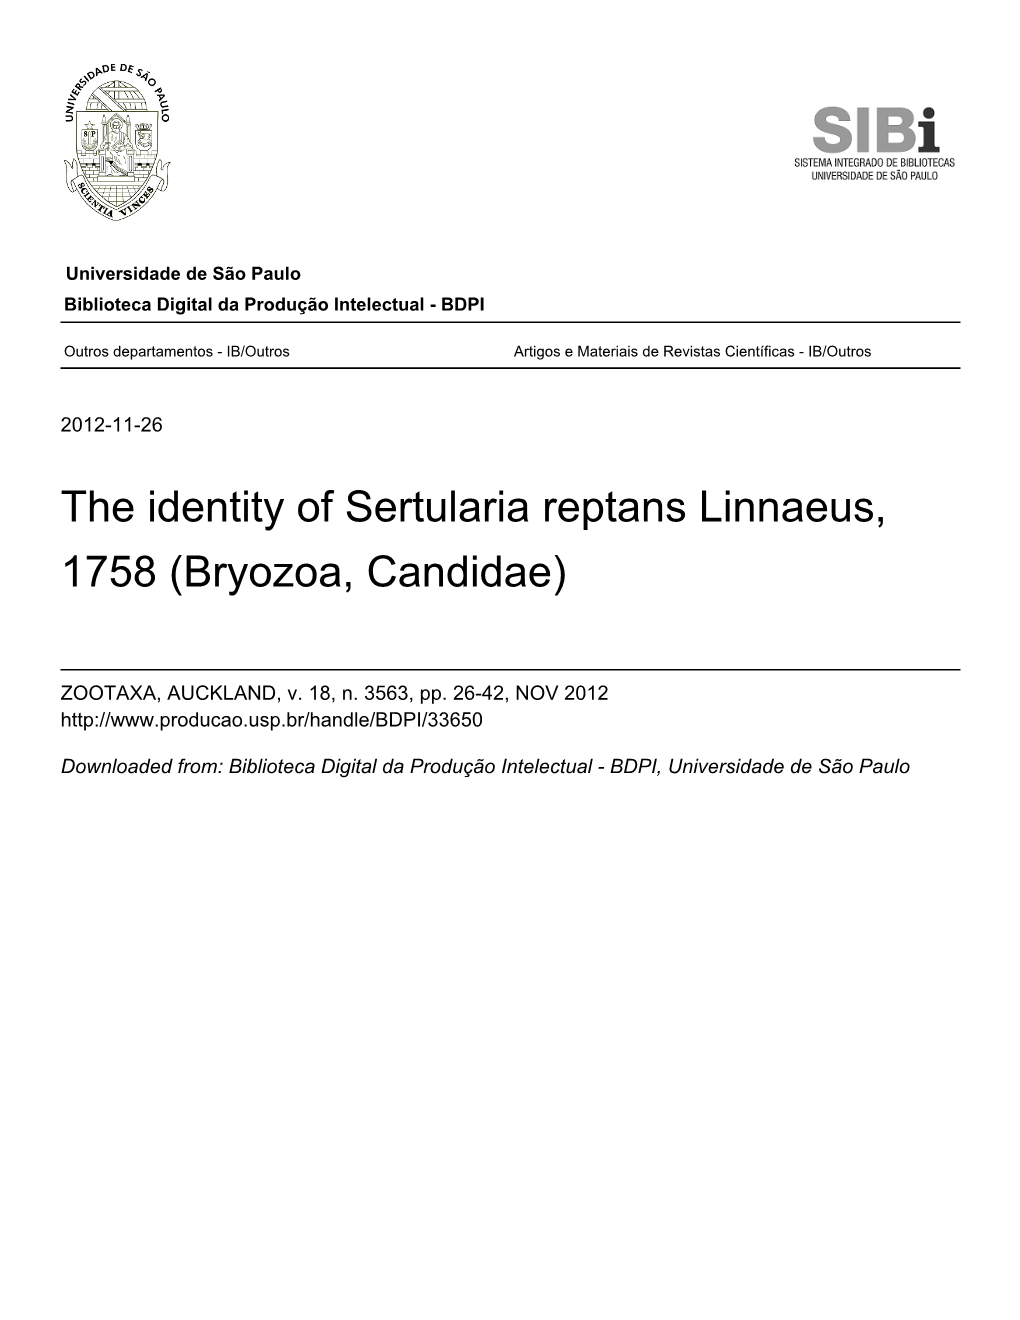 The Identity of Sertularia Reptans Linnaeus, 1758 (Bryozoa, Candidae)